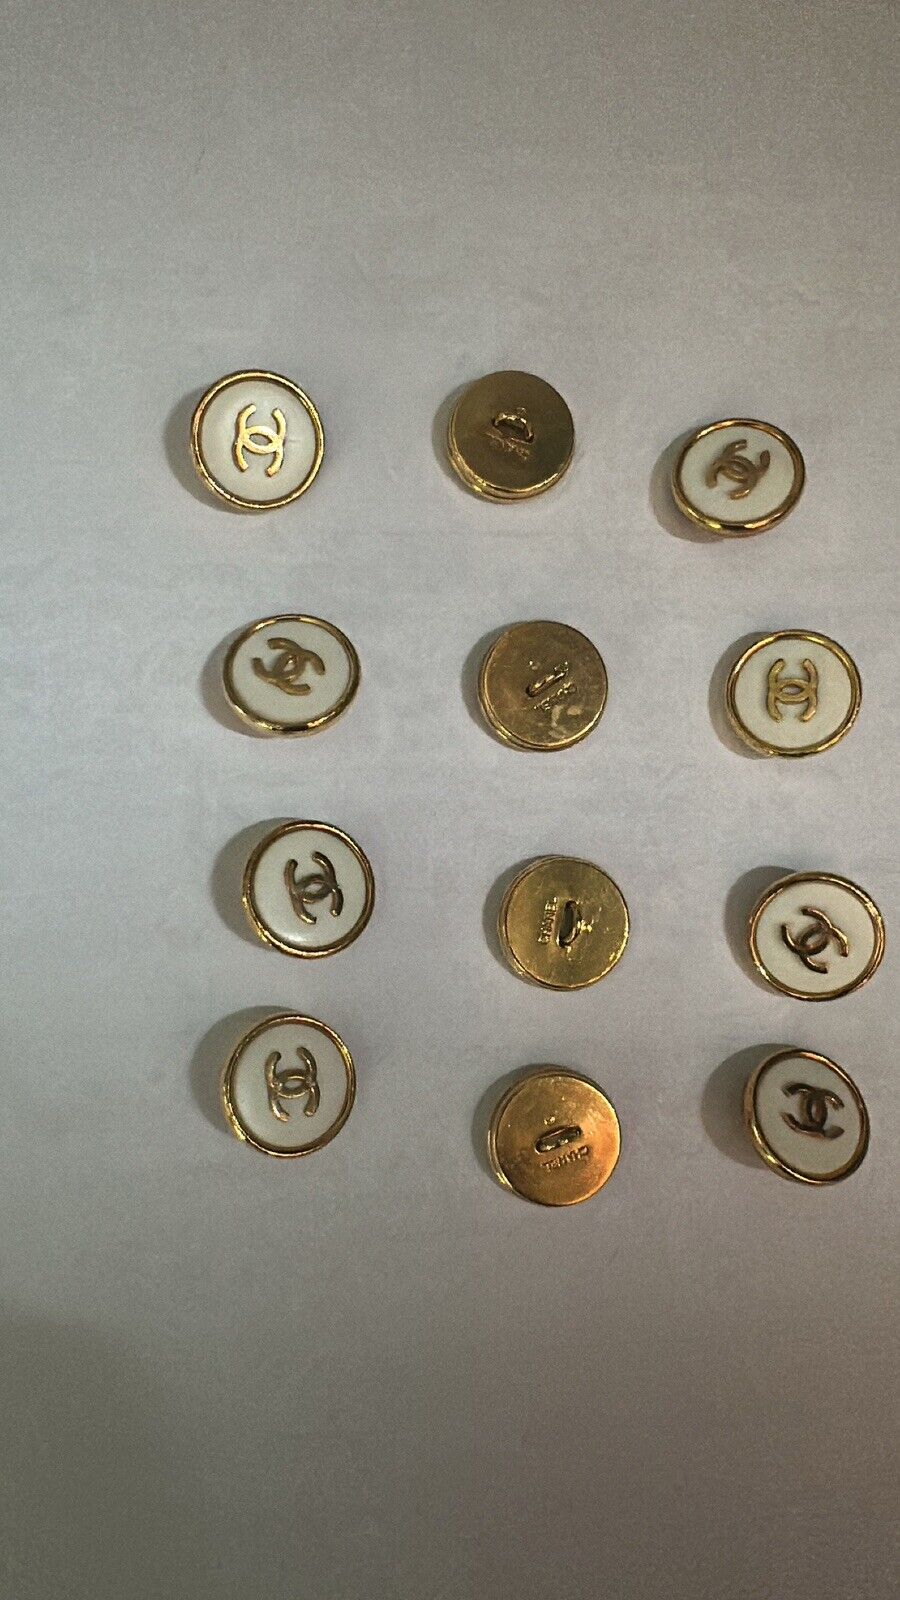 Authentic Chanel Buttons Set of 4 Pcs